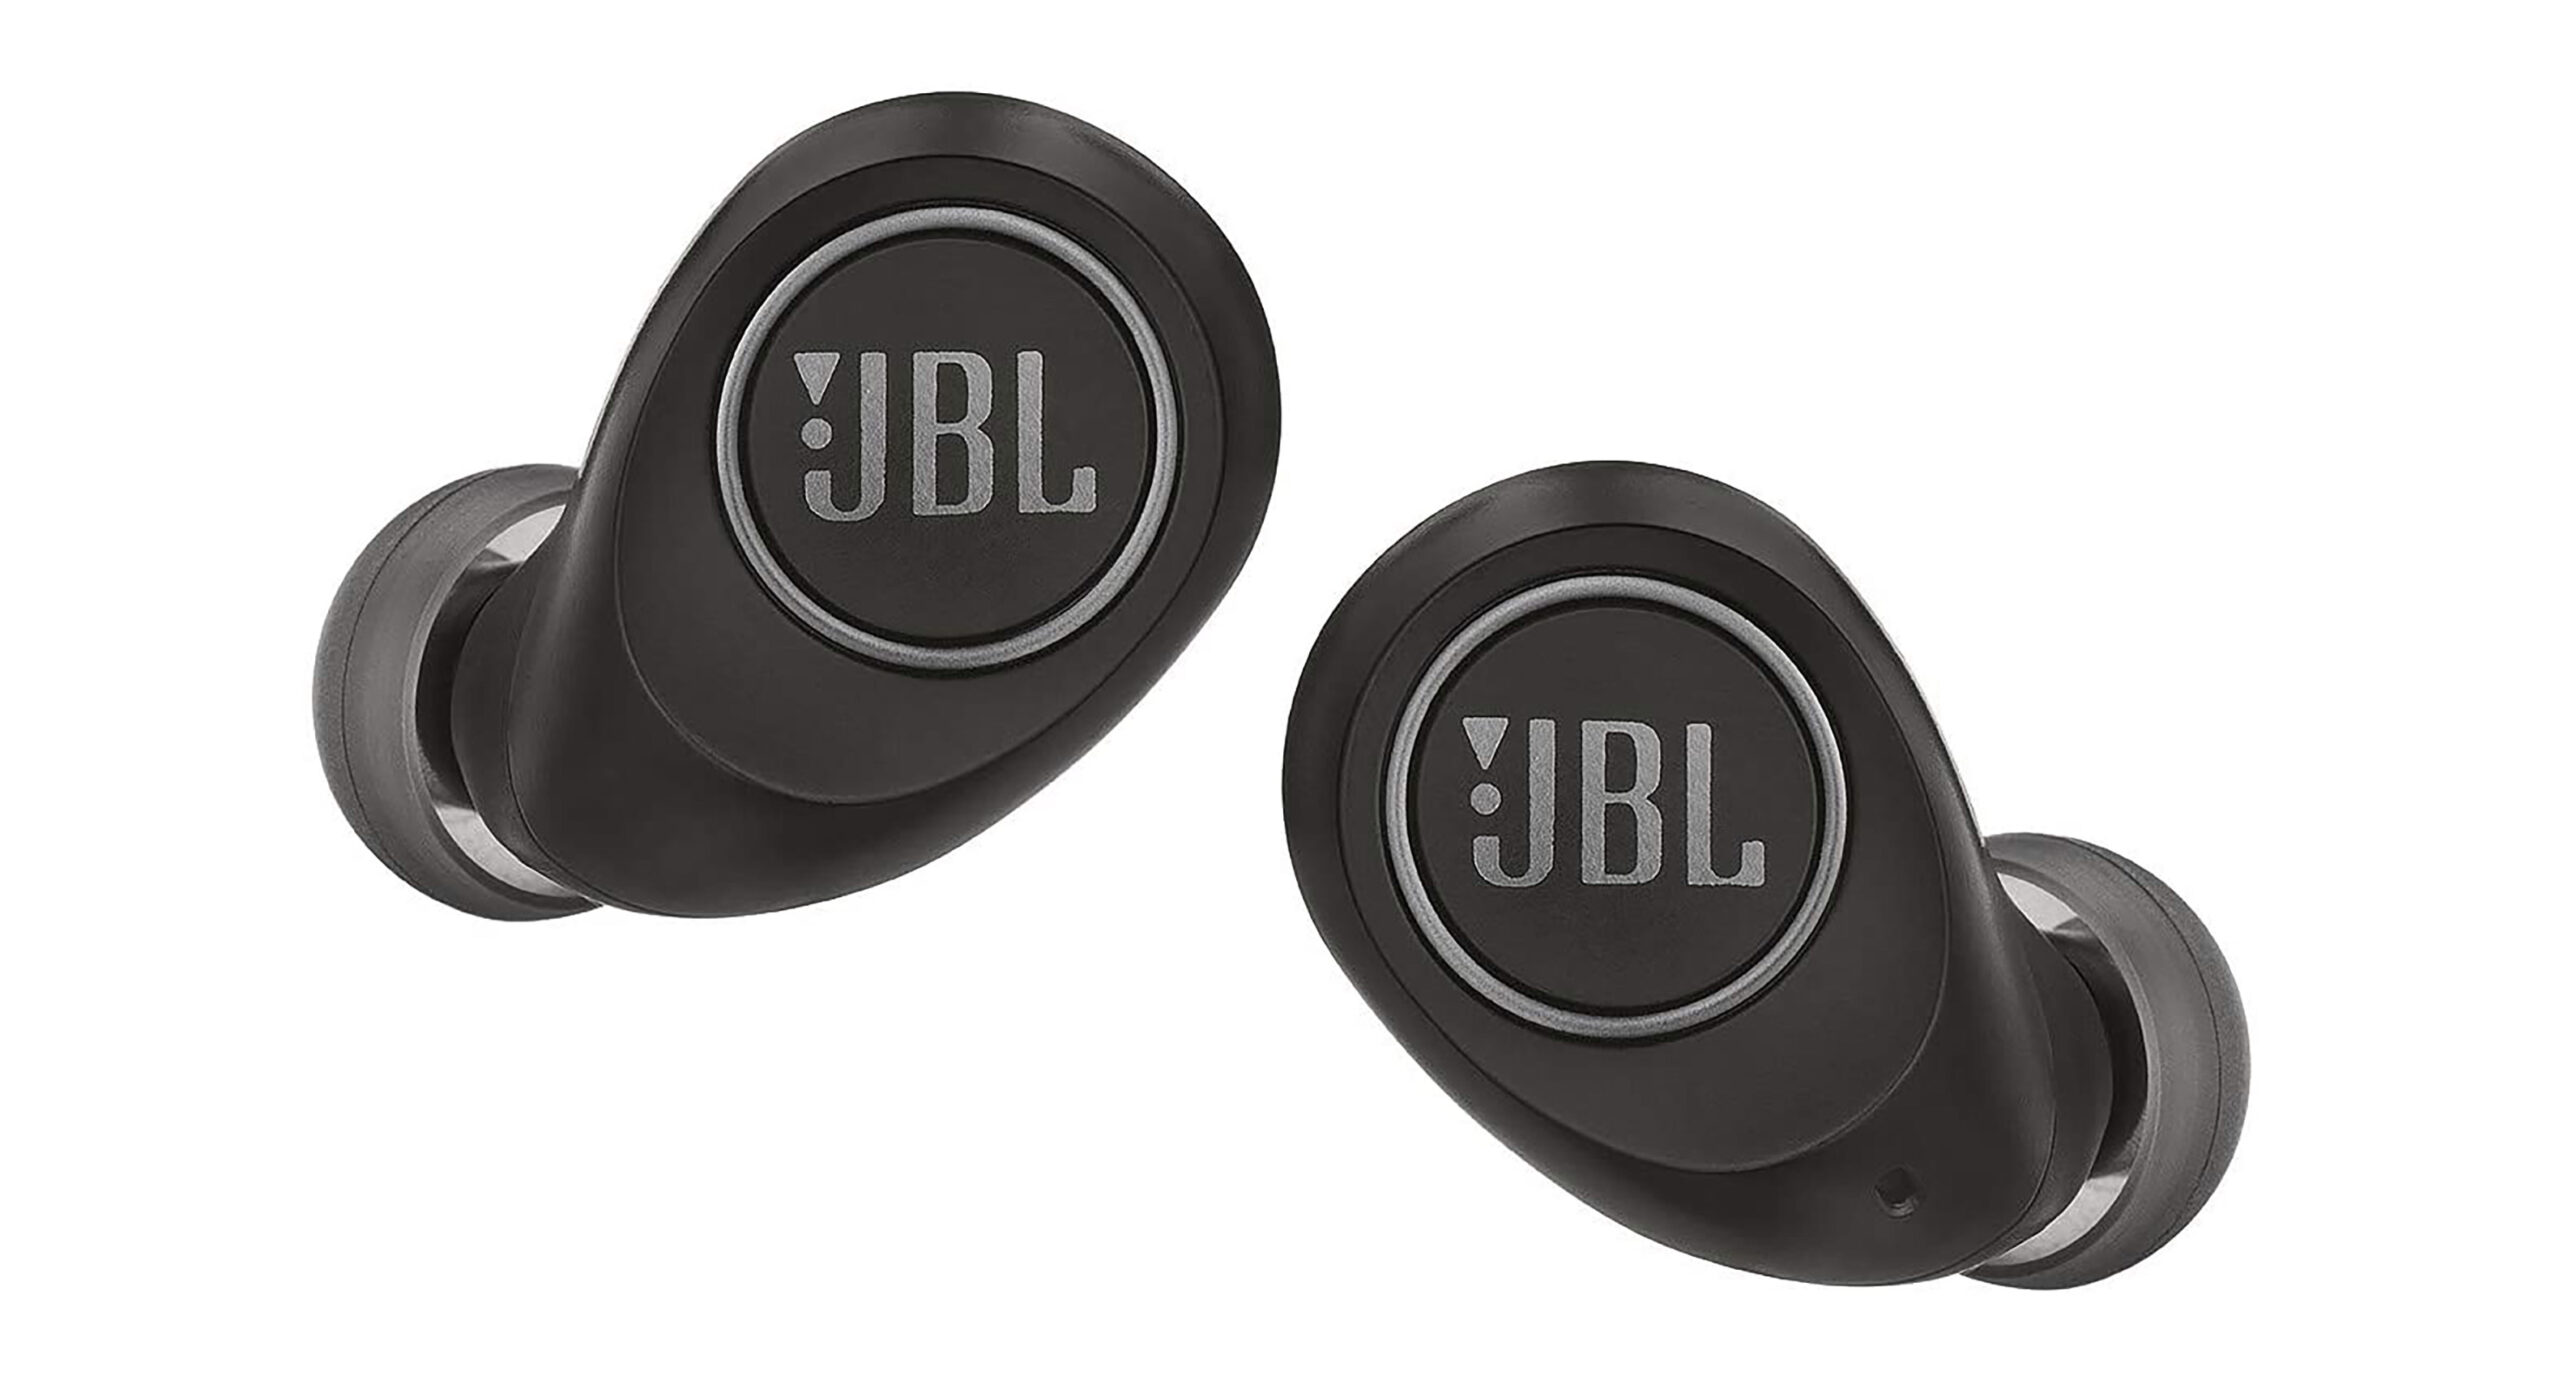 JBL true wireless headphones